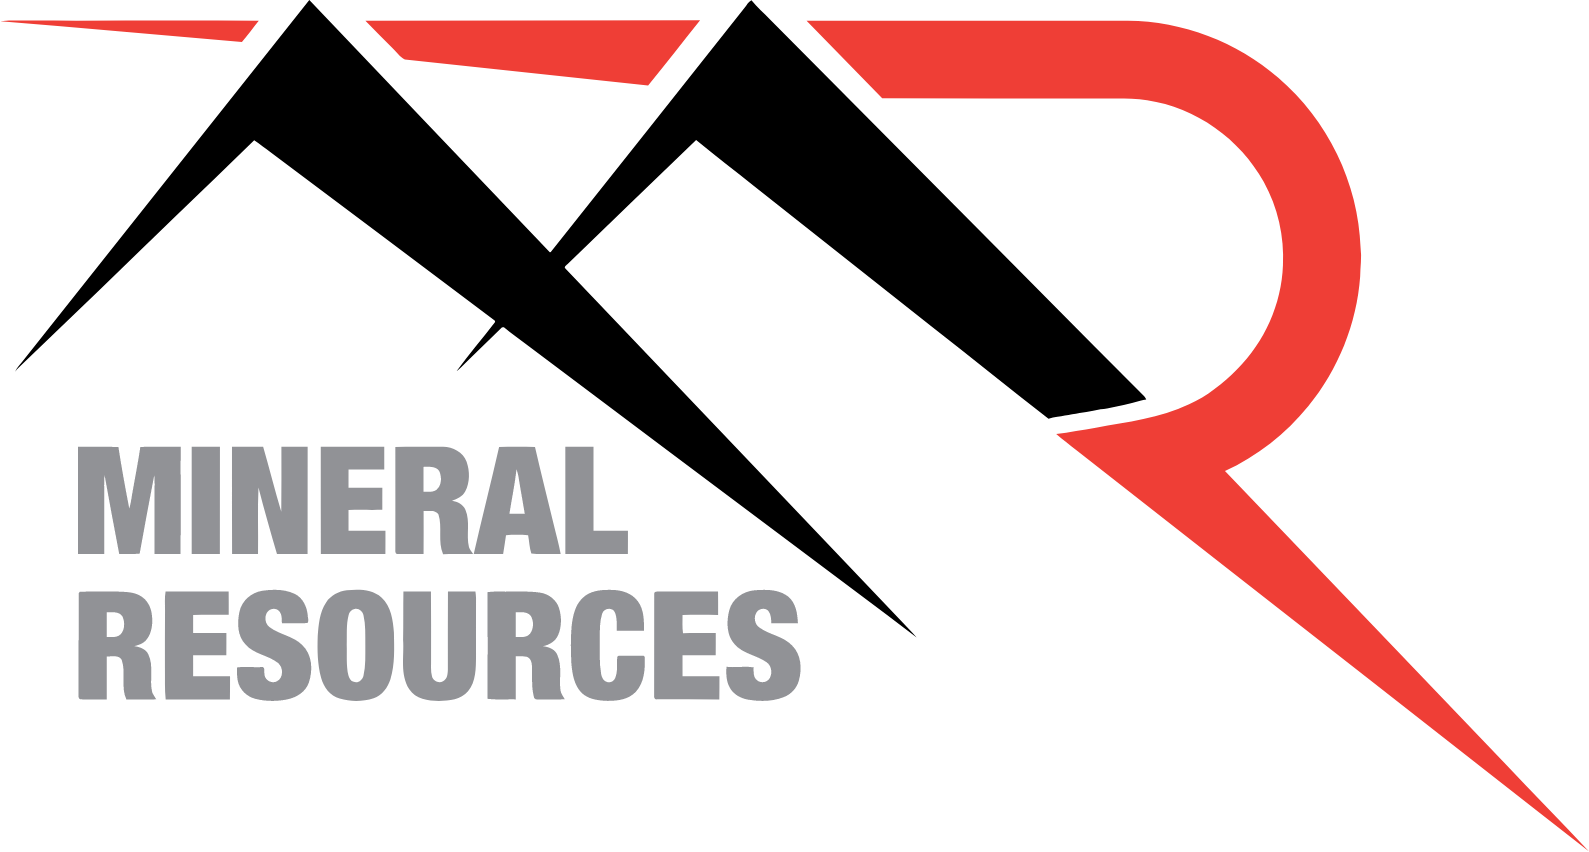 Mineral Resources logo large (transparent PNG)